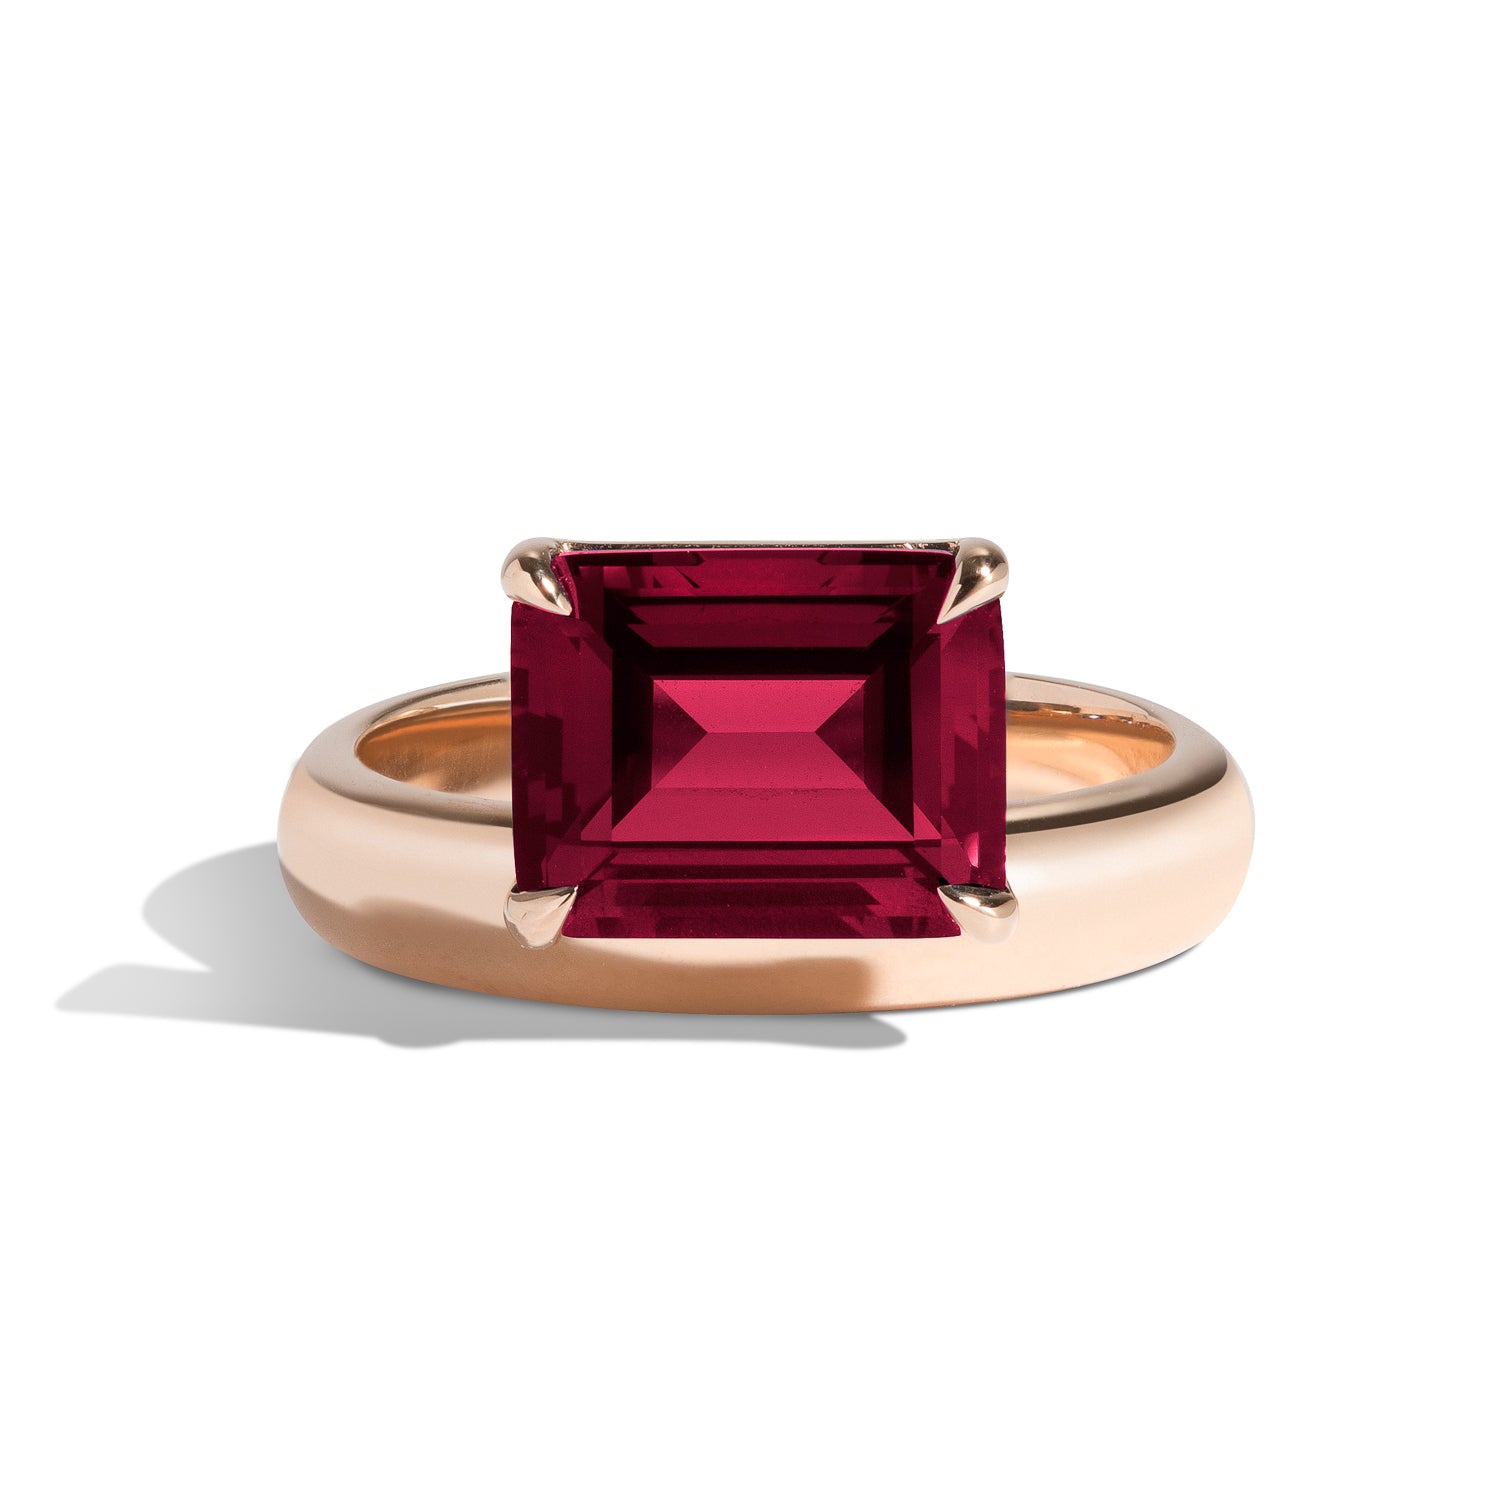 Shahla Karimi Jewelry Wright Emerald Cut Ruby Offset Donut Ring 14K Rose Gold